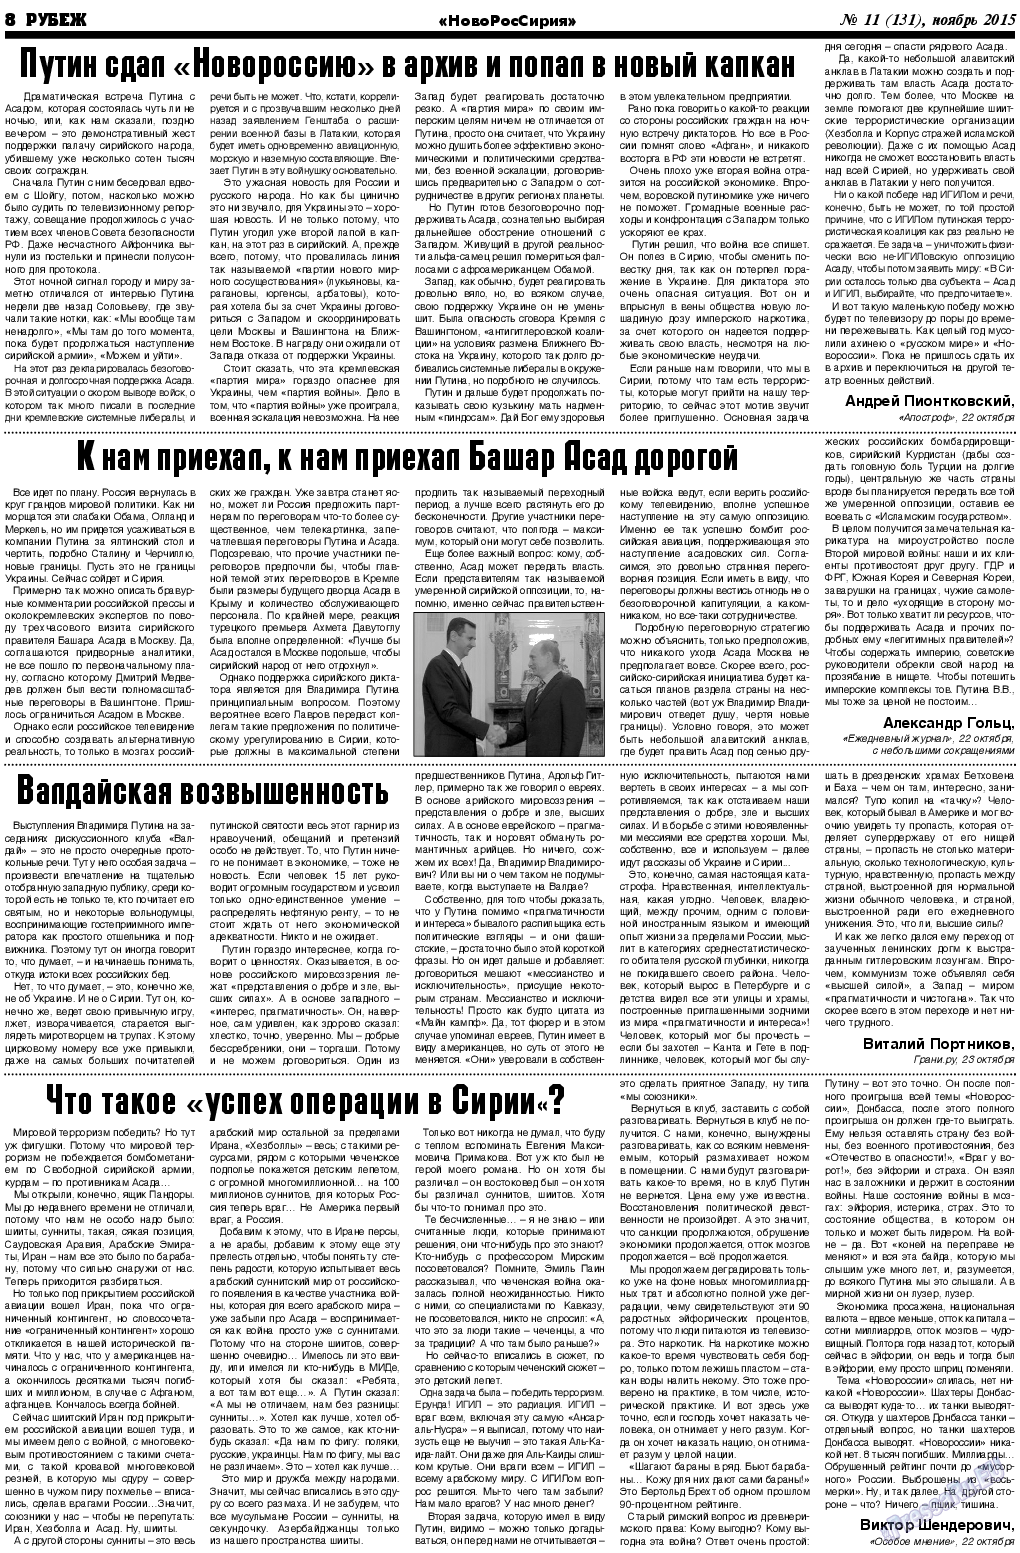 Рубеж, газета. 2015 №11 стр.8